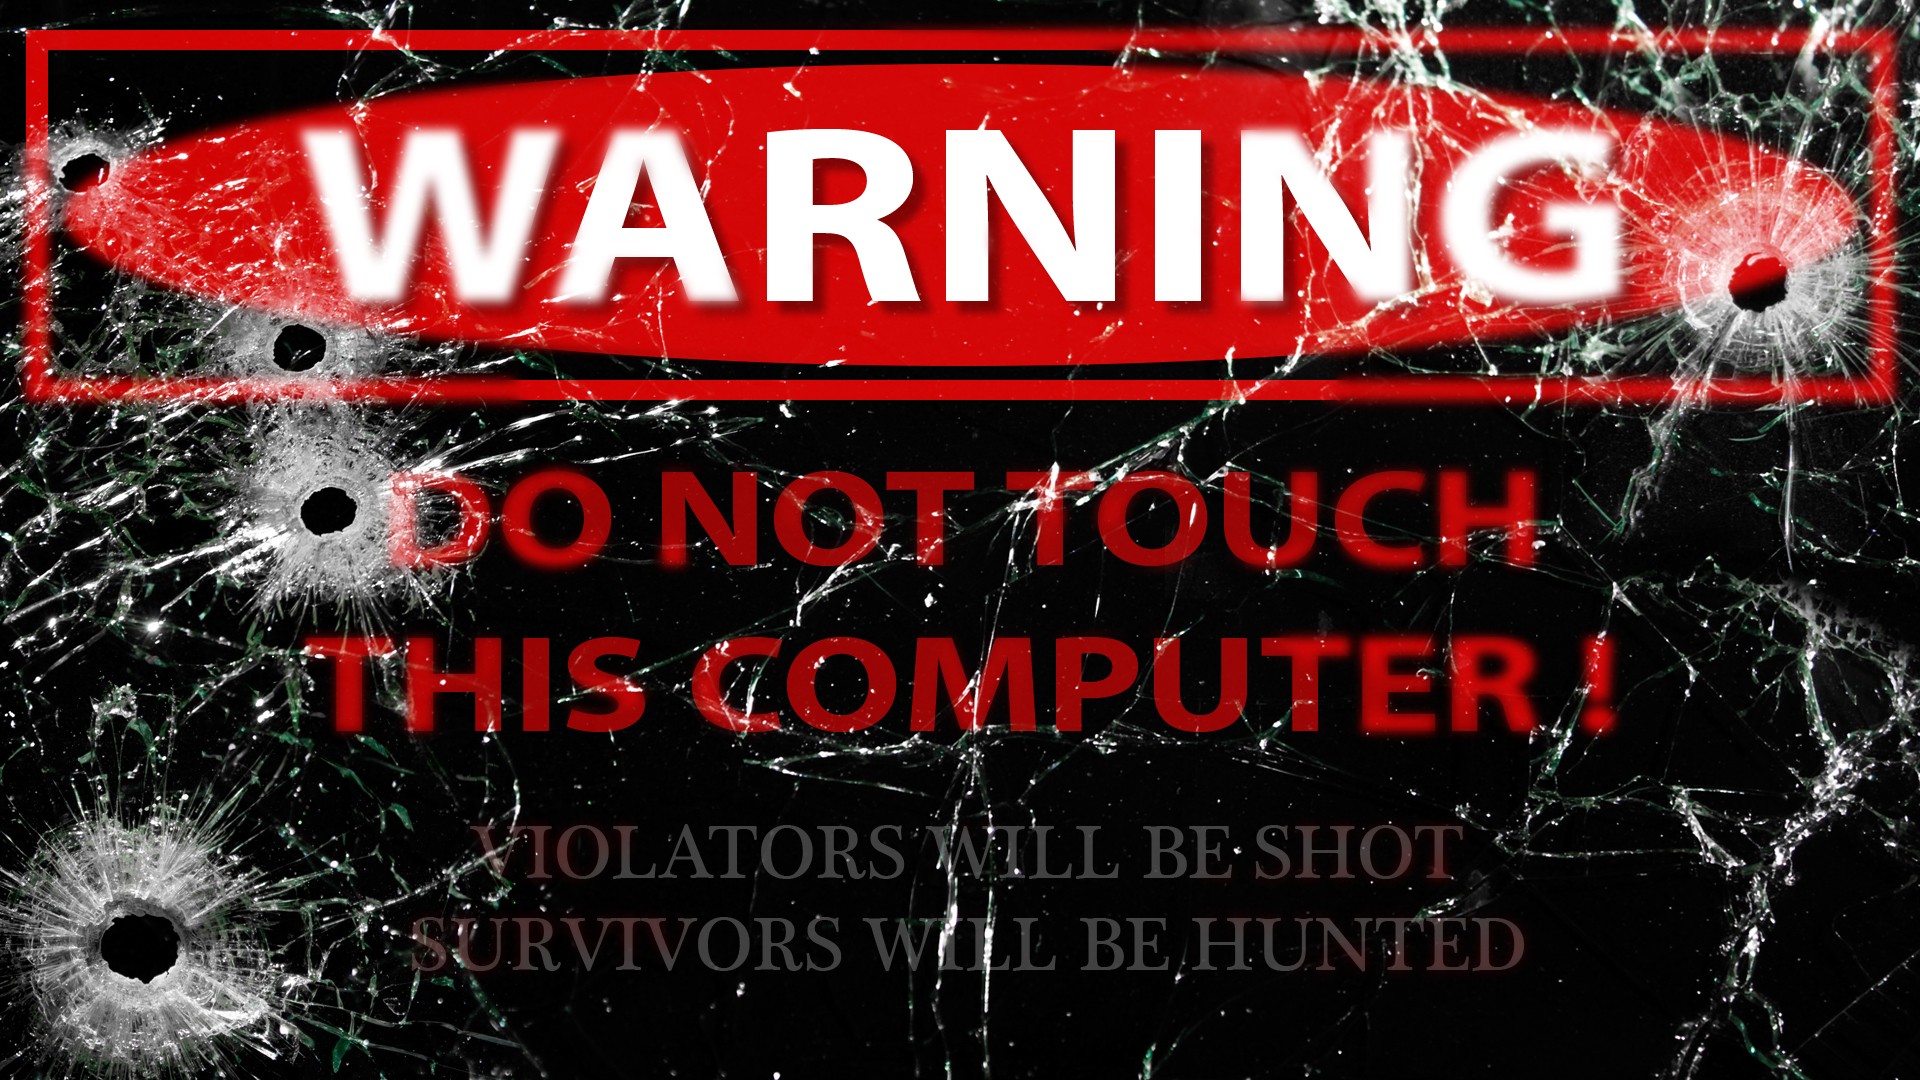 44+] Warning Wallpaper HD - WallpaperSafari